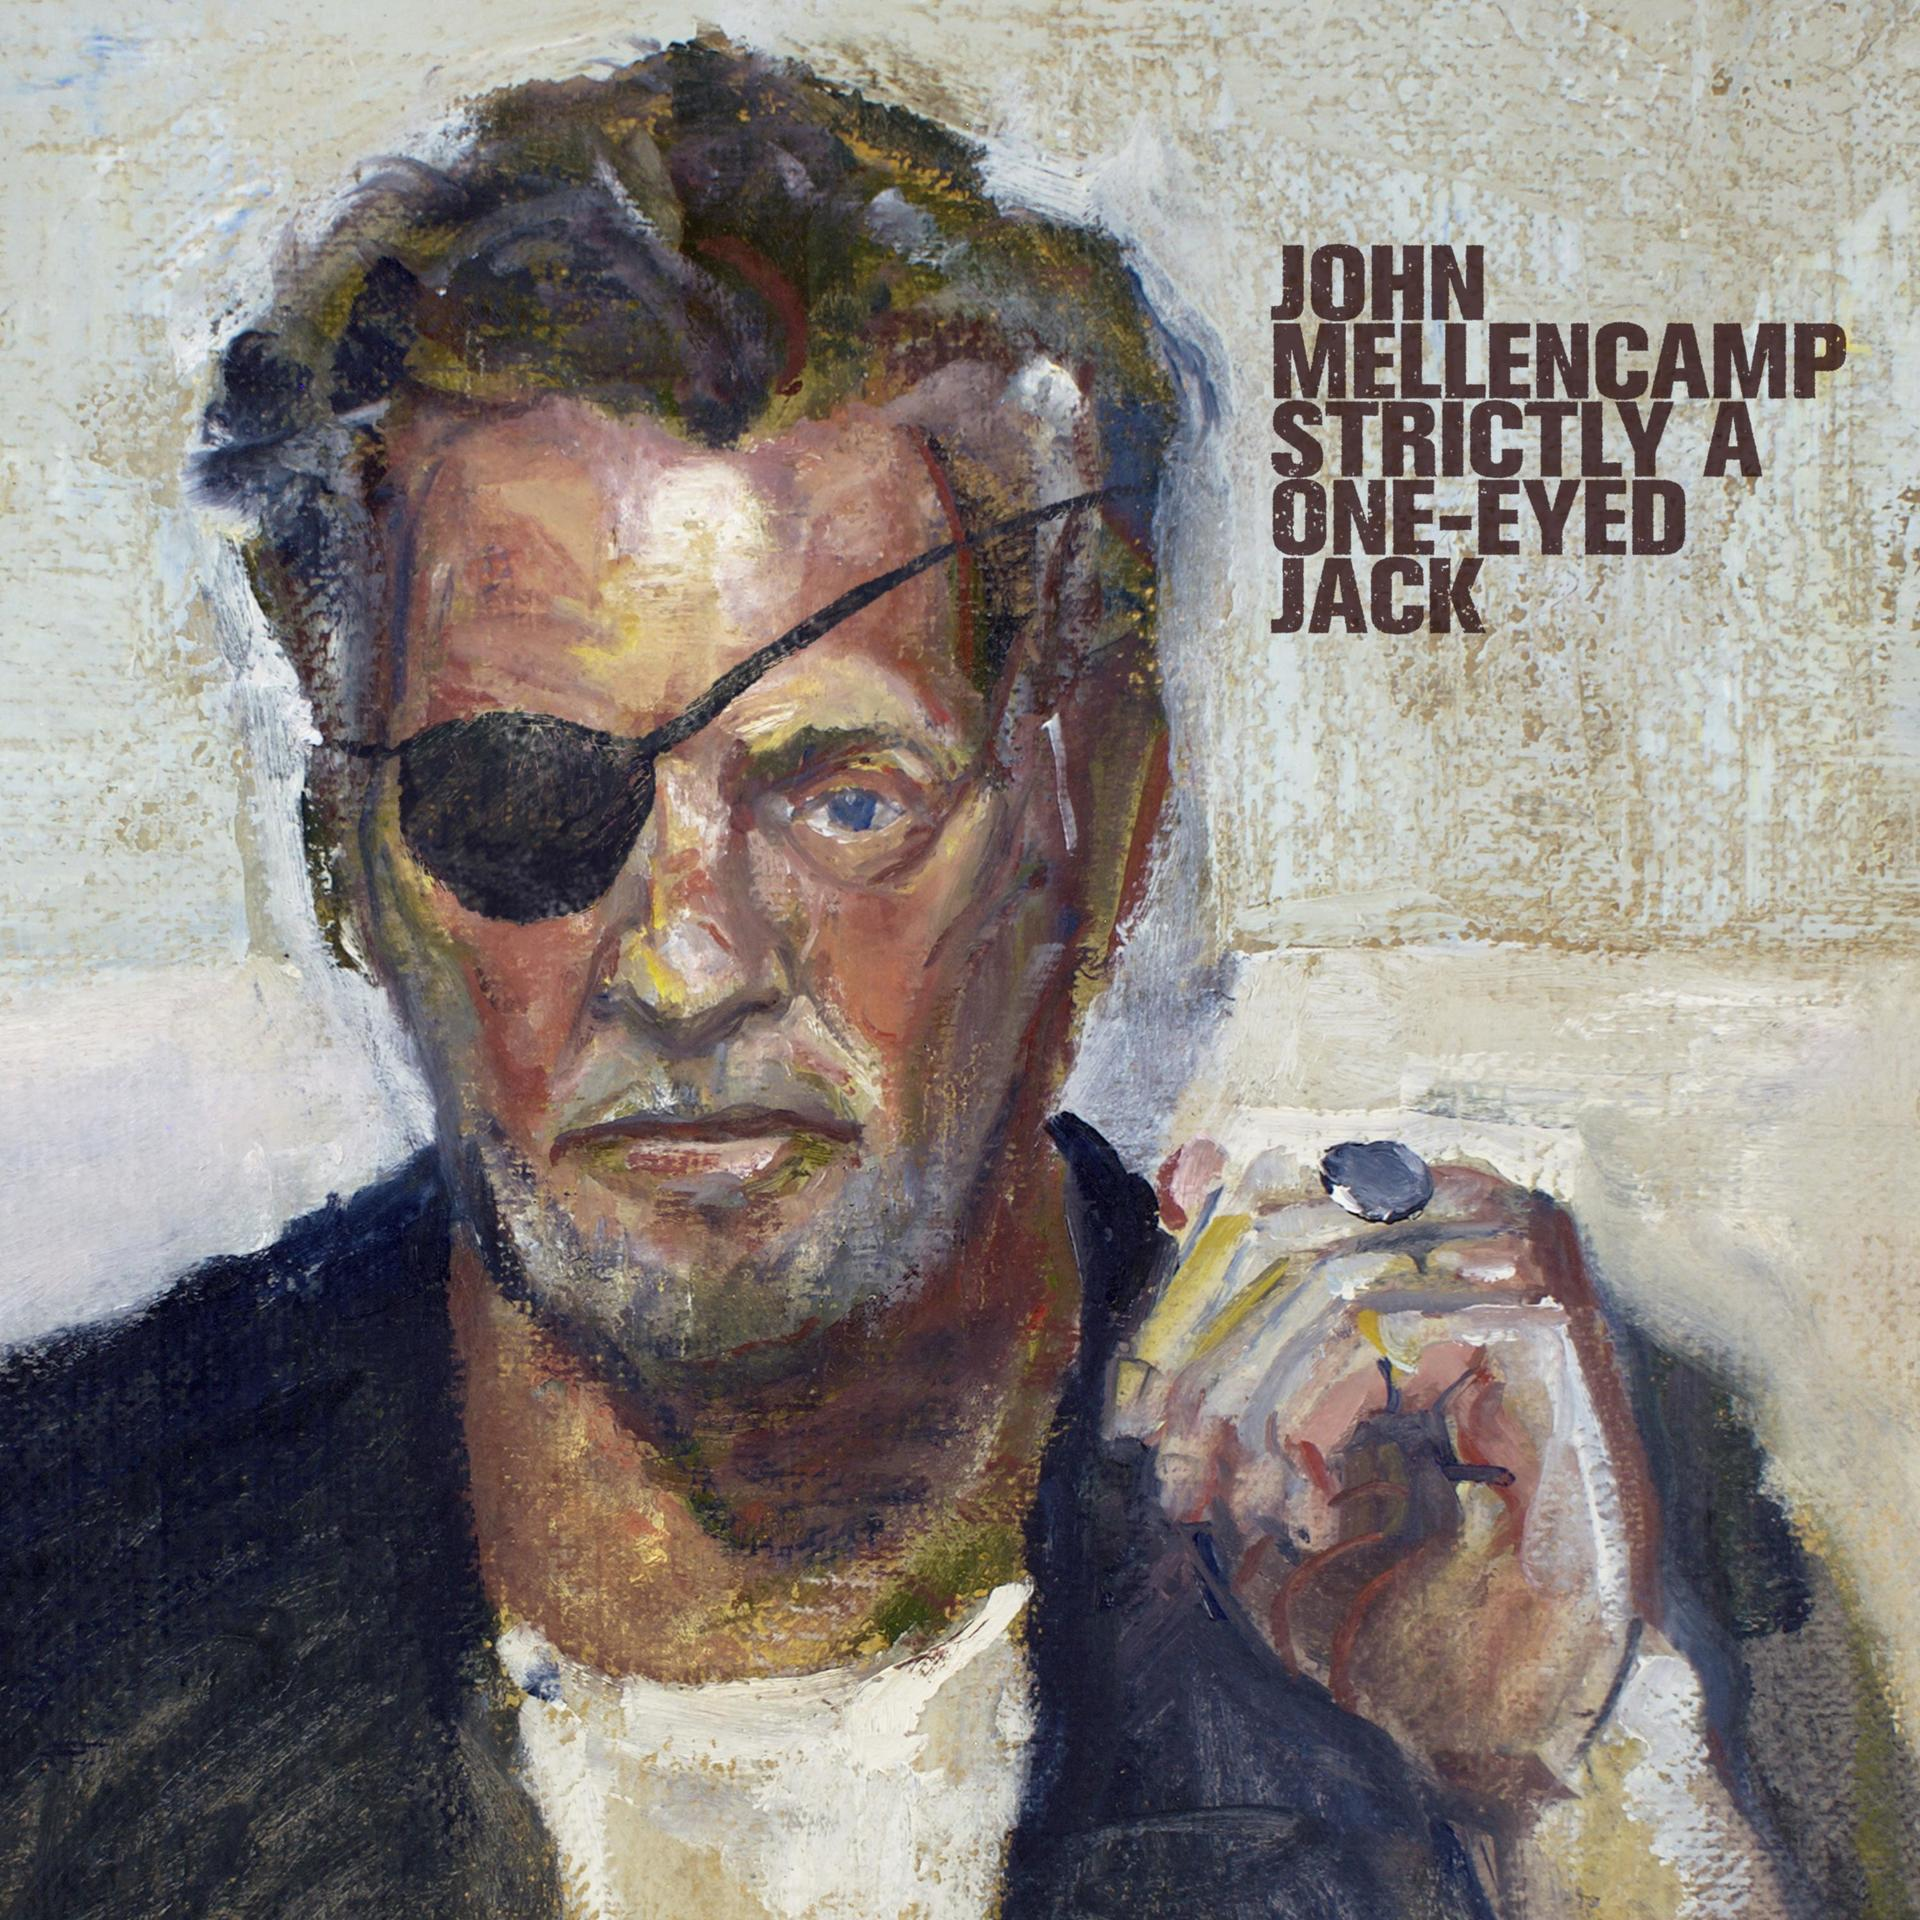 John Mellencamp - A - One-Eyed (CD) Strictly Jack